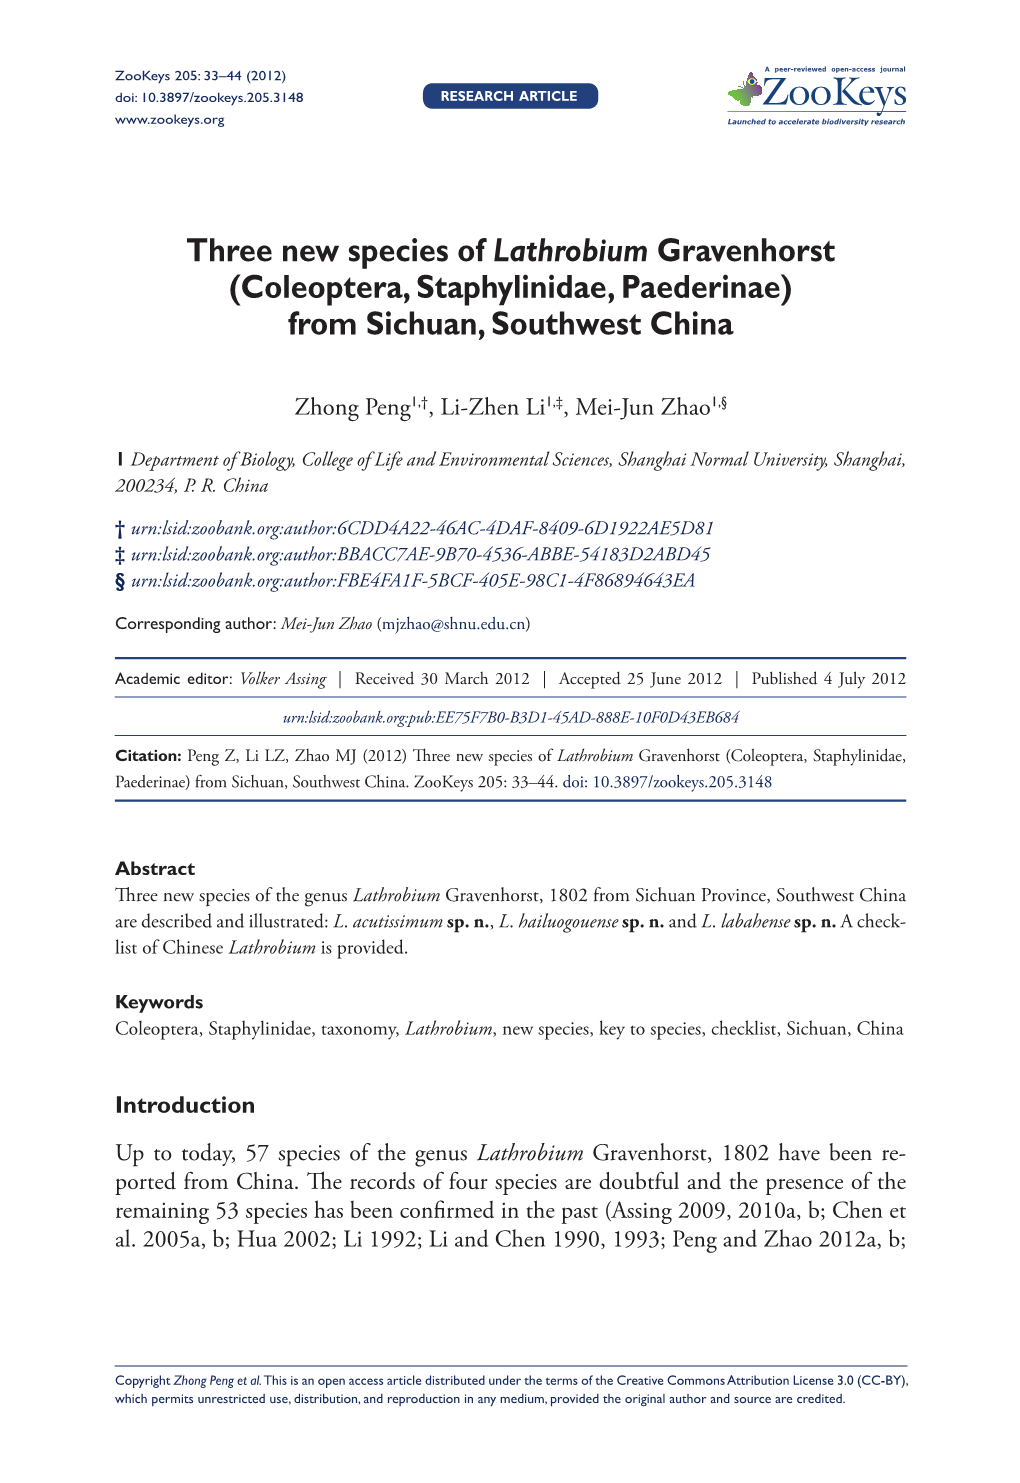 Three New Species of Lathrobium Gravenhorst (Coleoptera, Staphylinidae, Paederinae) from Sichuan, Southwest China